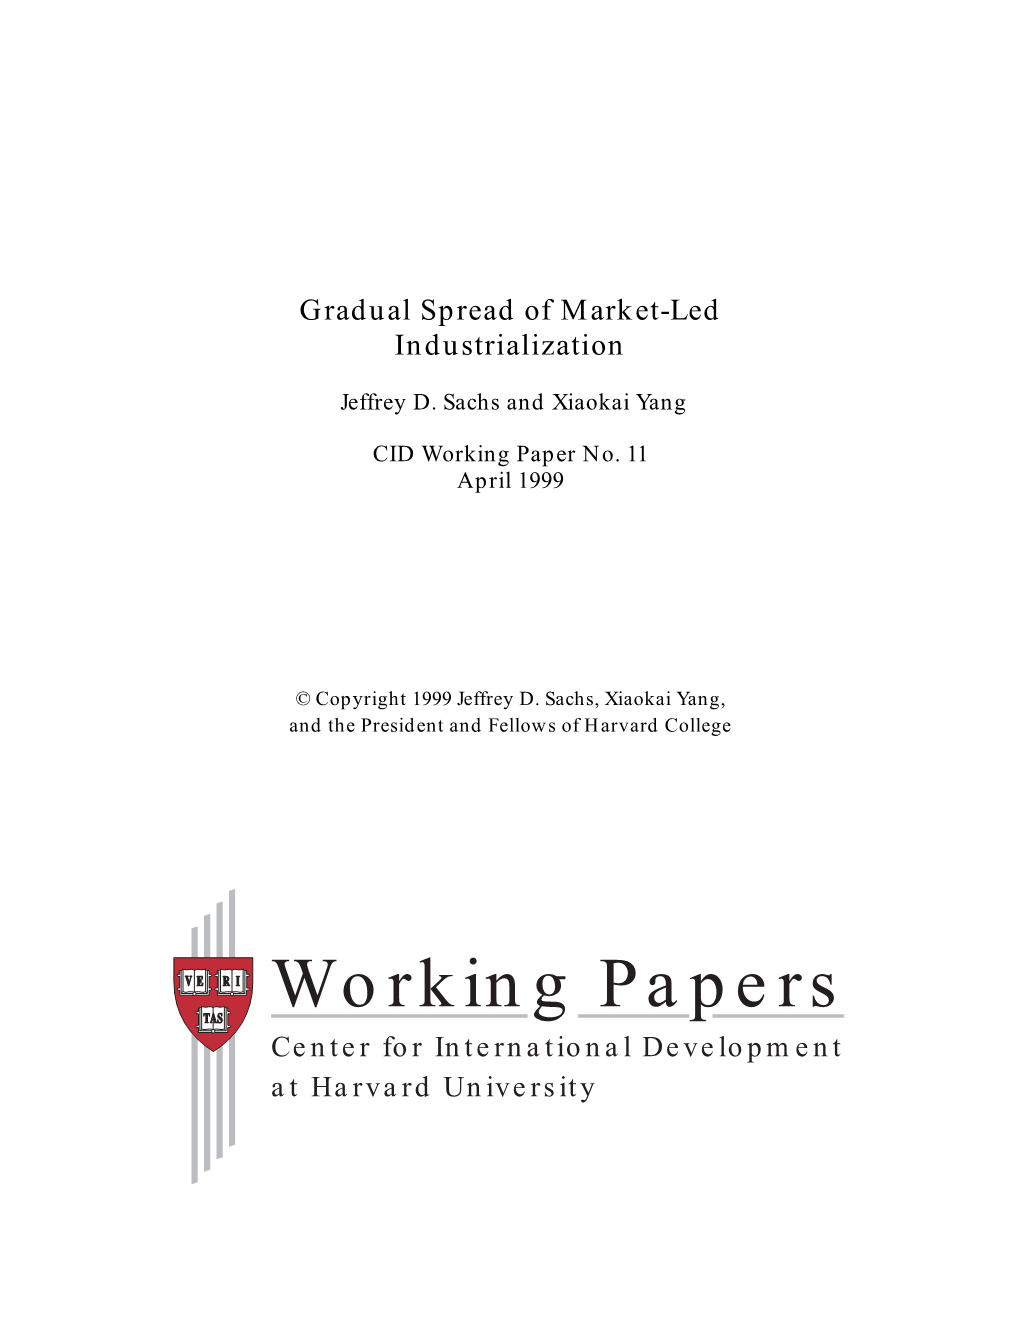 CID Working Paper No. 011 :: Gradual Spread of Market-Led